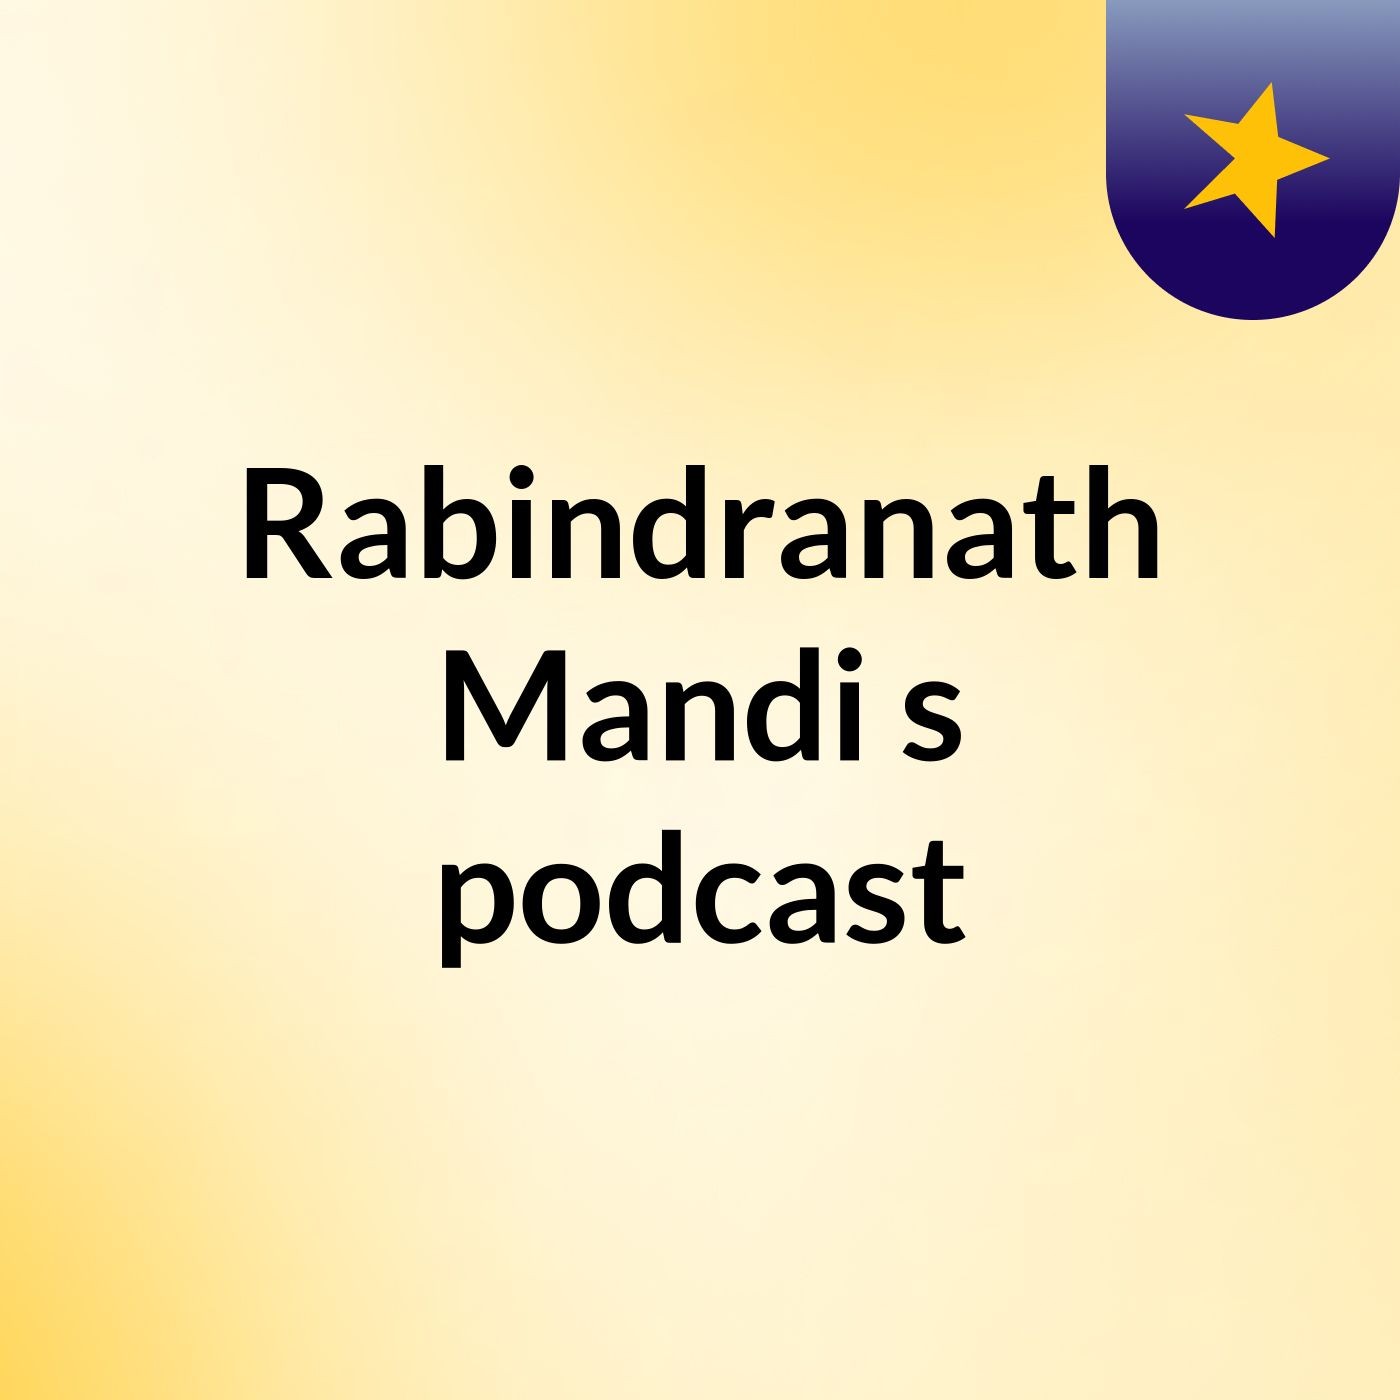 Rabindranath Mandi's podcast